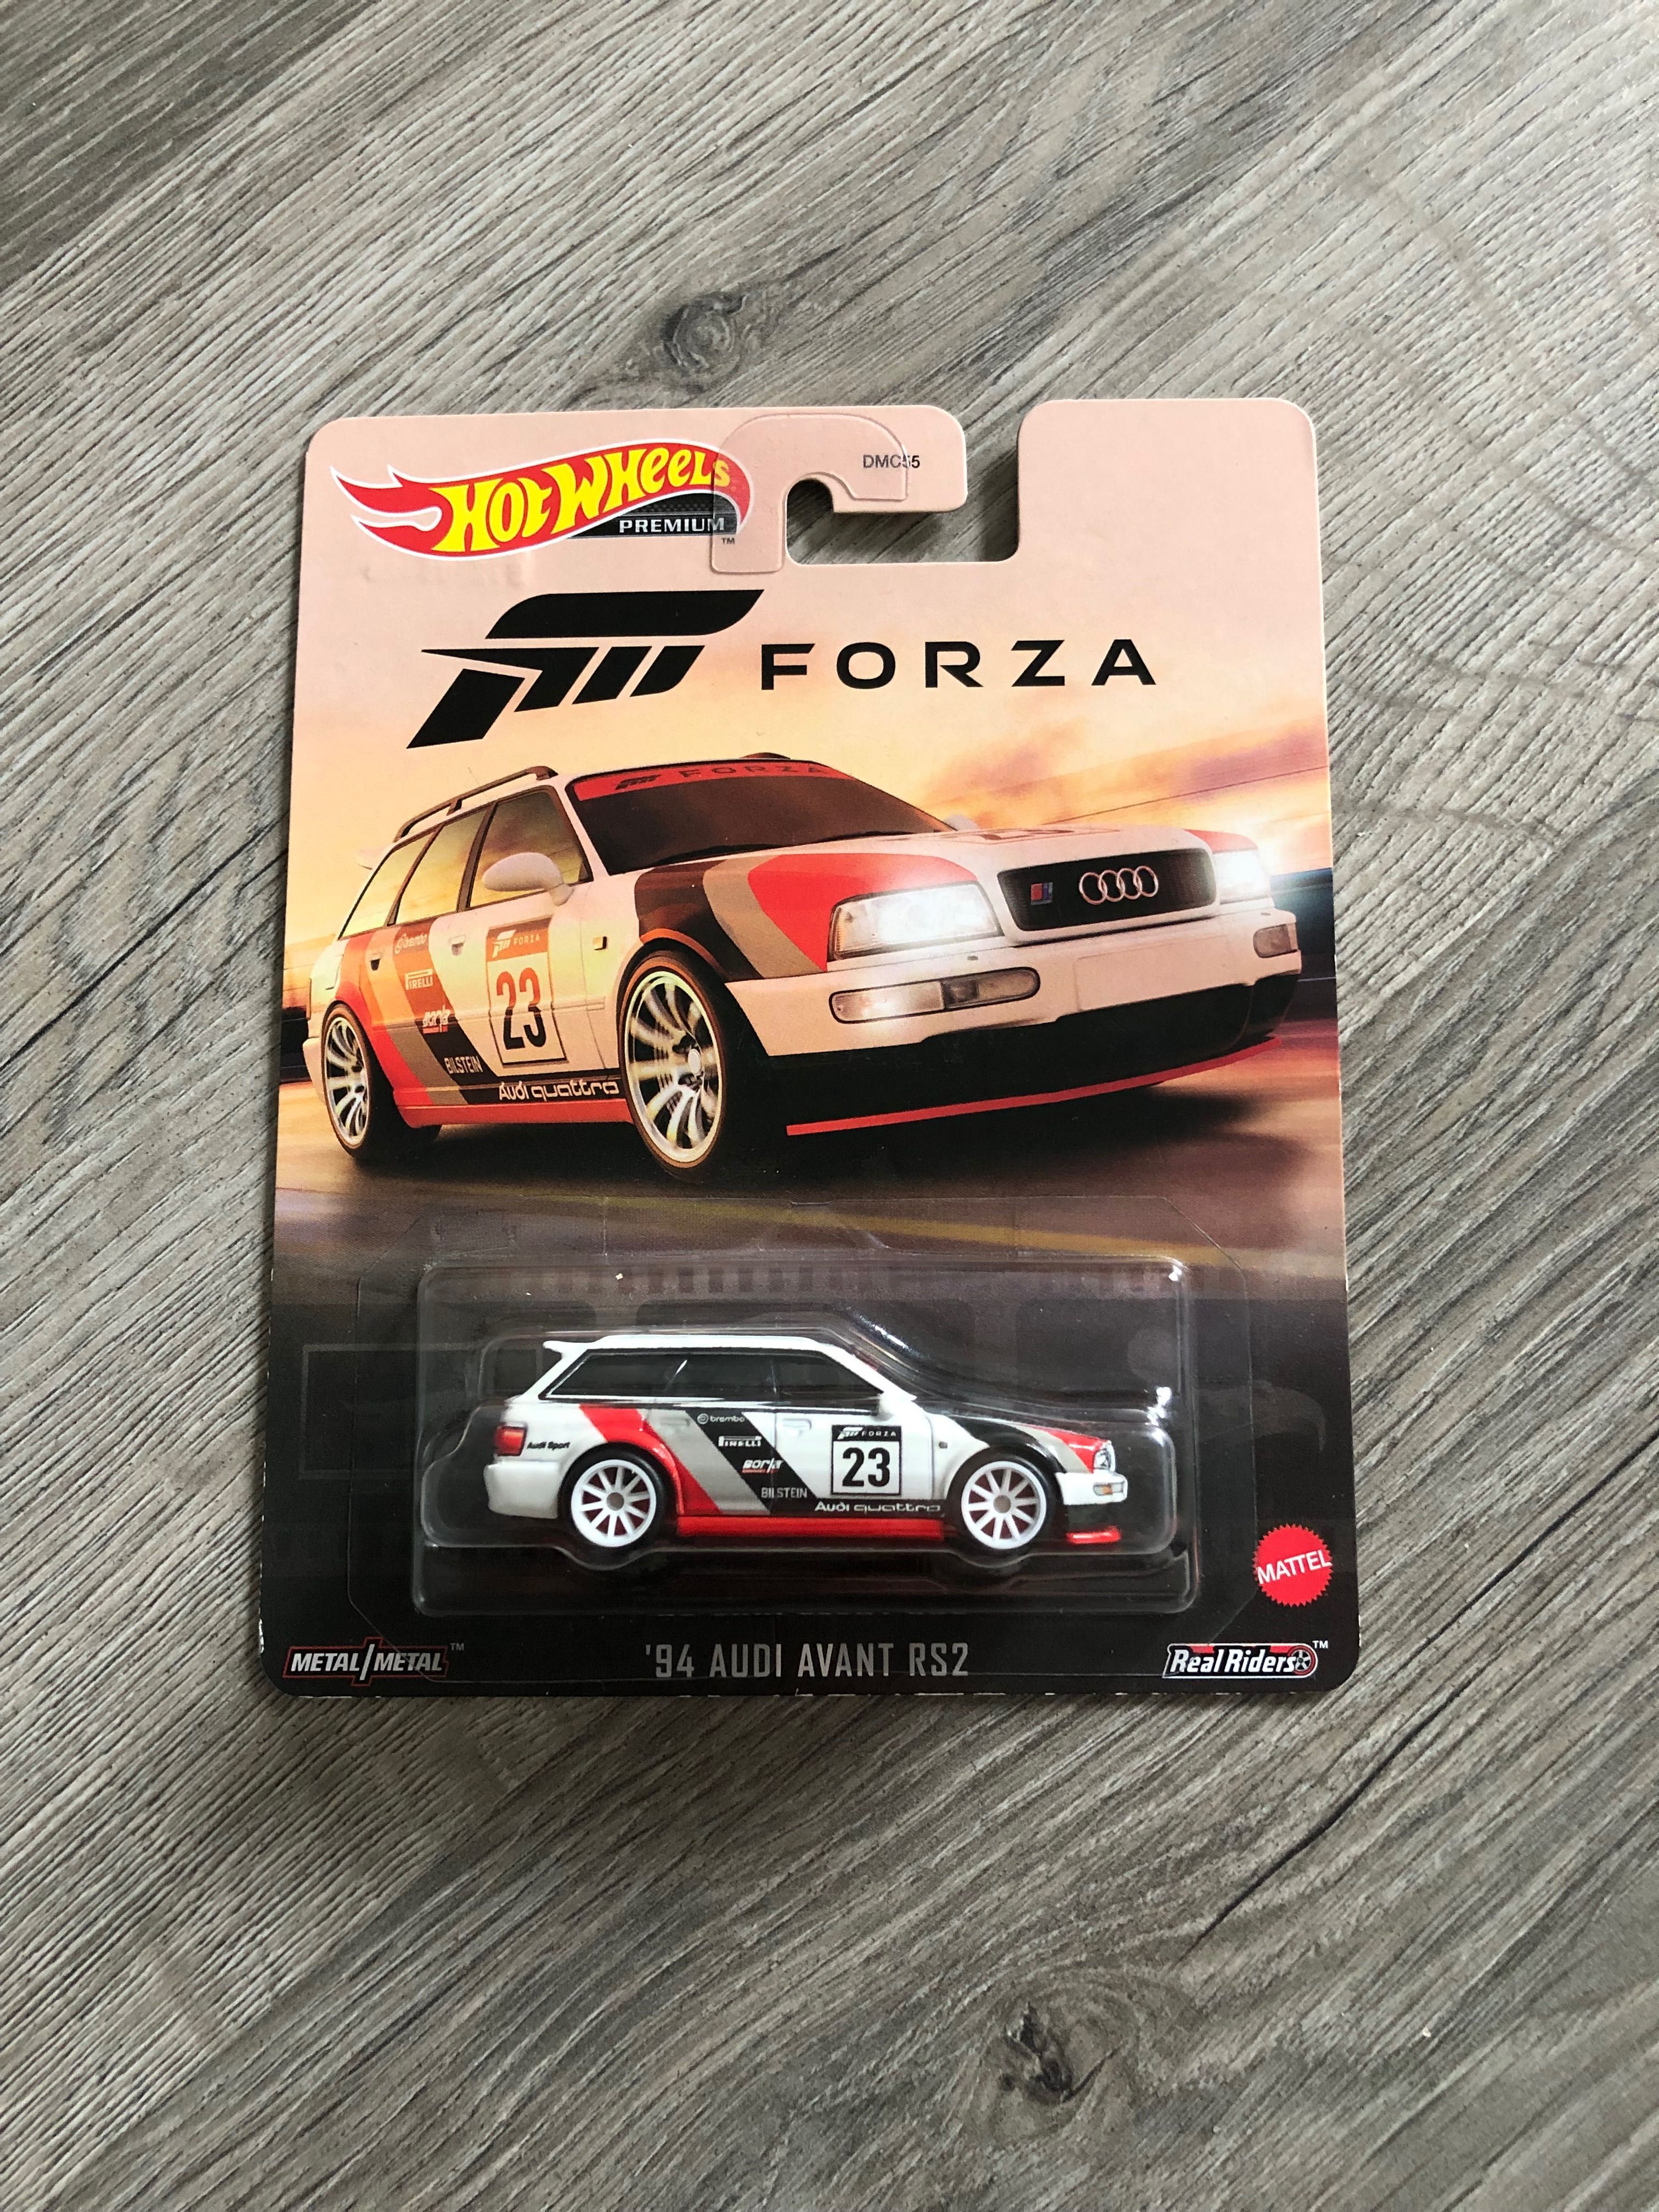 Hot wheels ‘94 Audi avant rs2